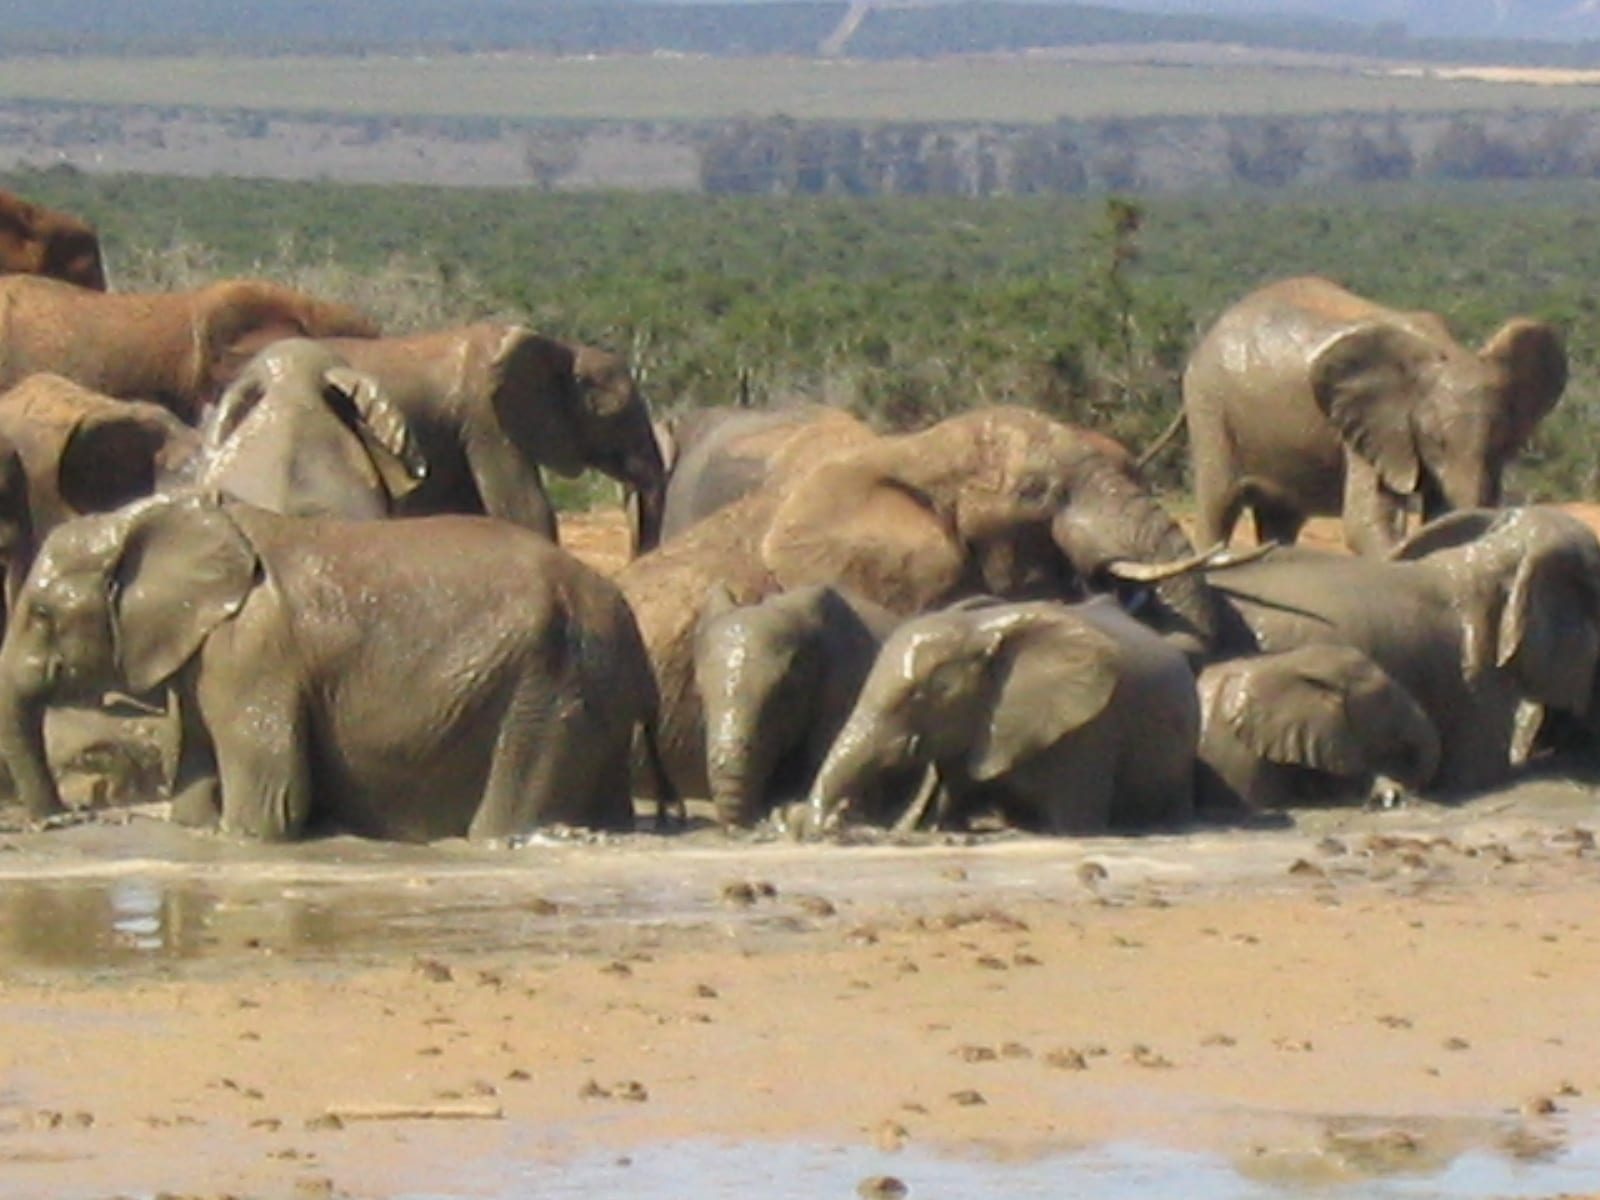 scores of elephants having a mudbath